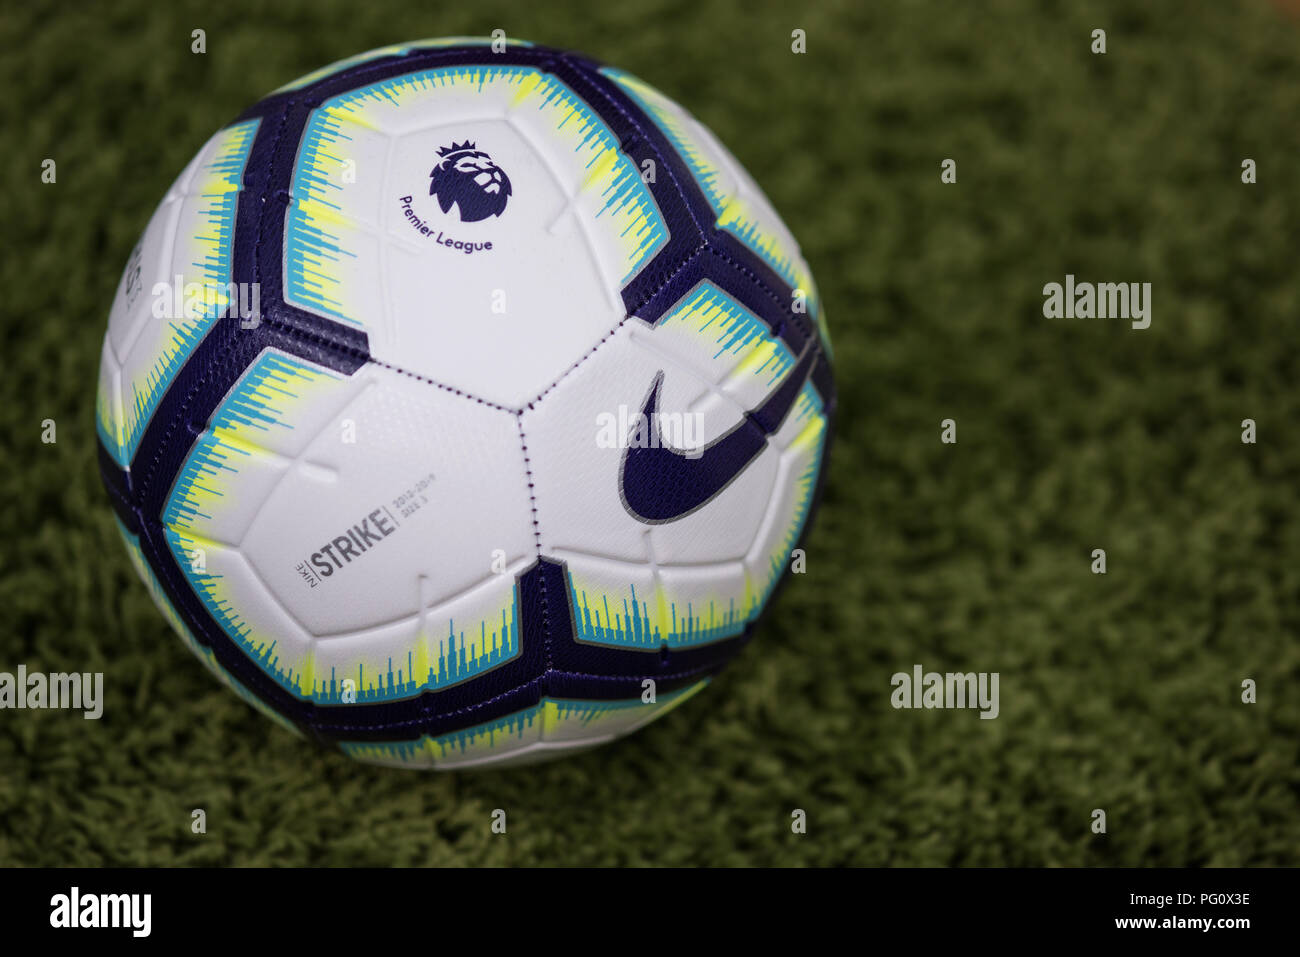 Nike Merlin ball for 2018/19 Premier League season Stock Photo - Alamy